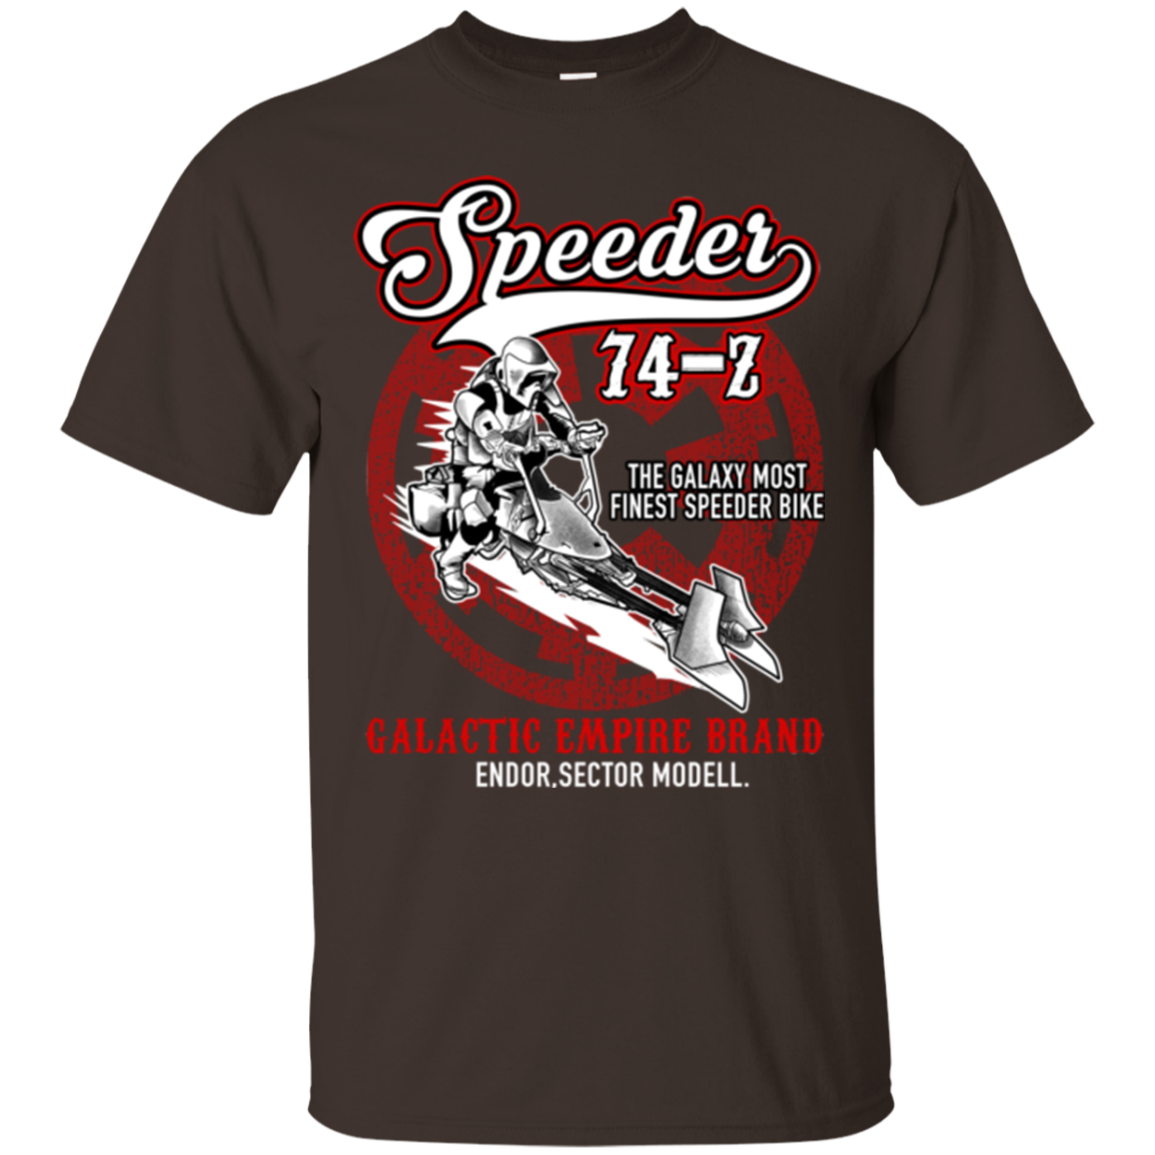 The Speeder T-Shirt